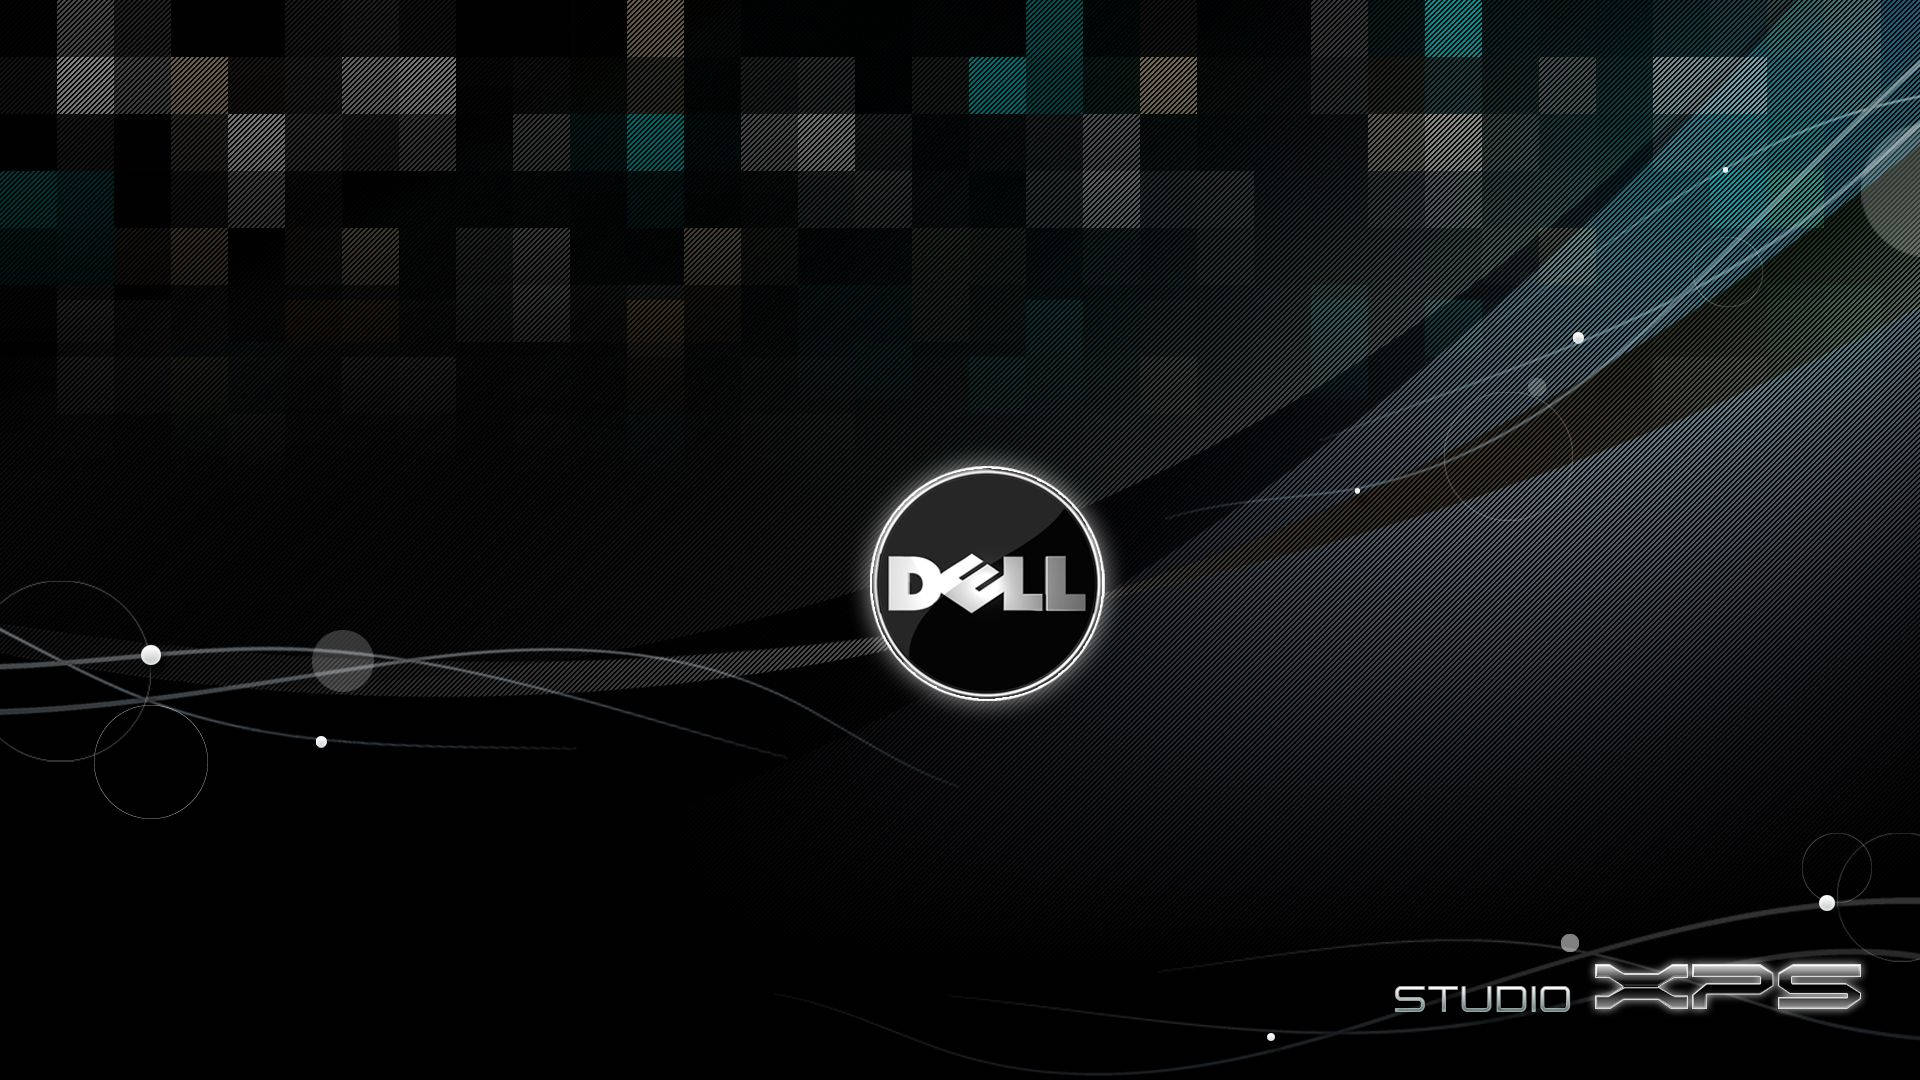 Stylish Black Dell Studio Xps Background